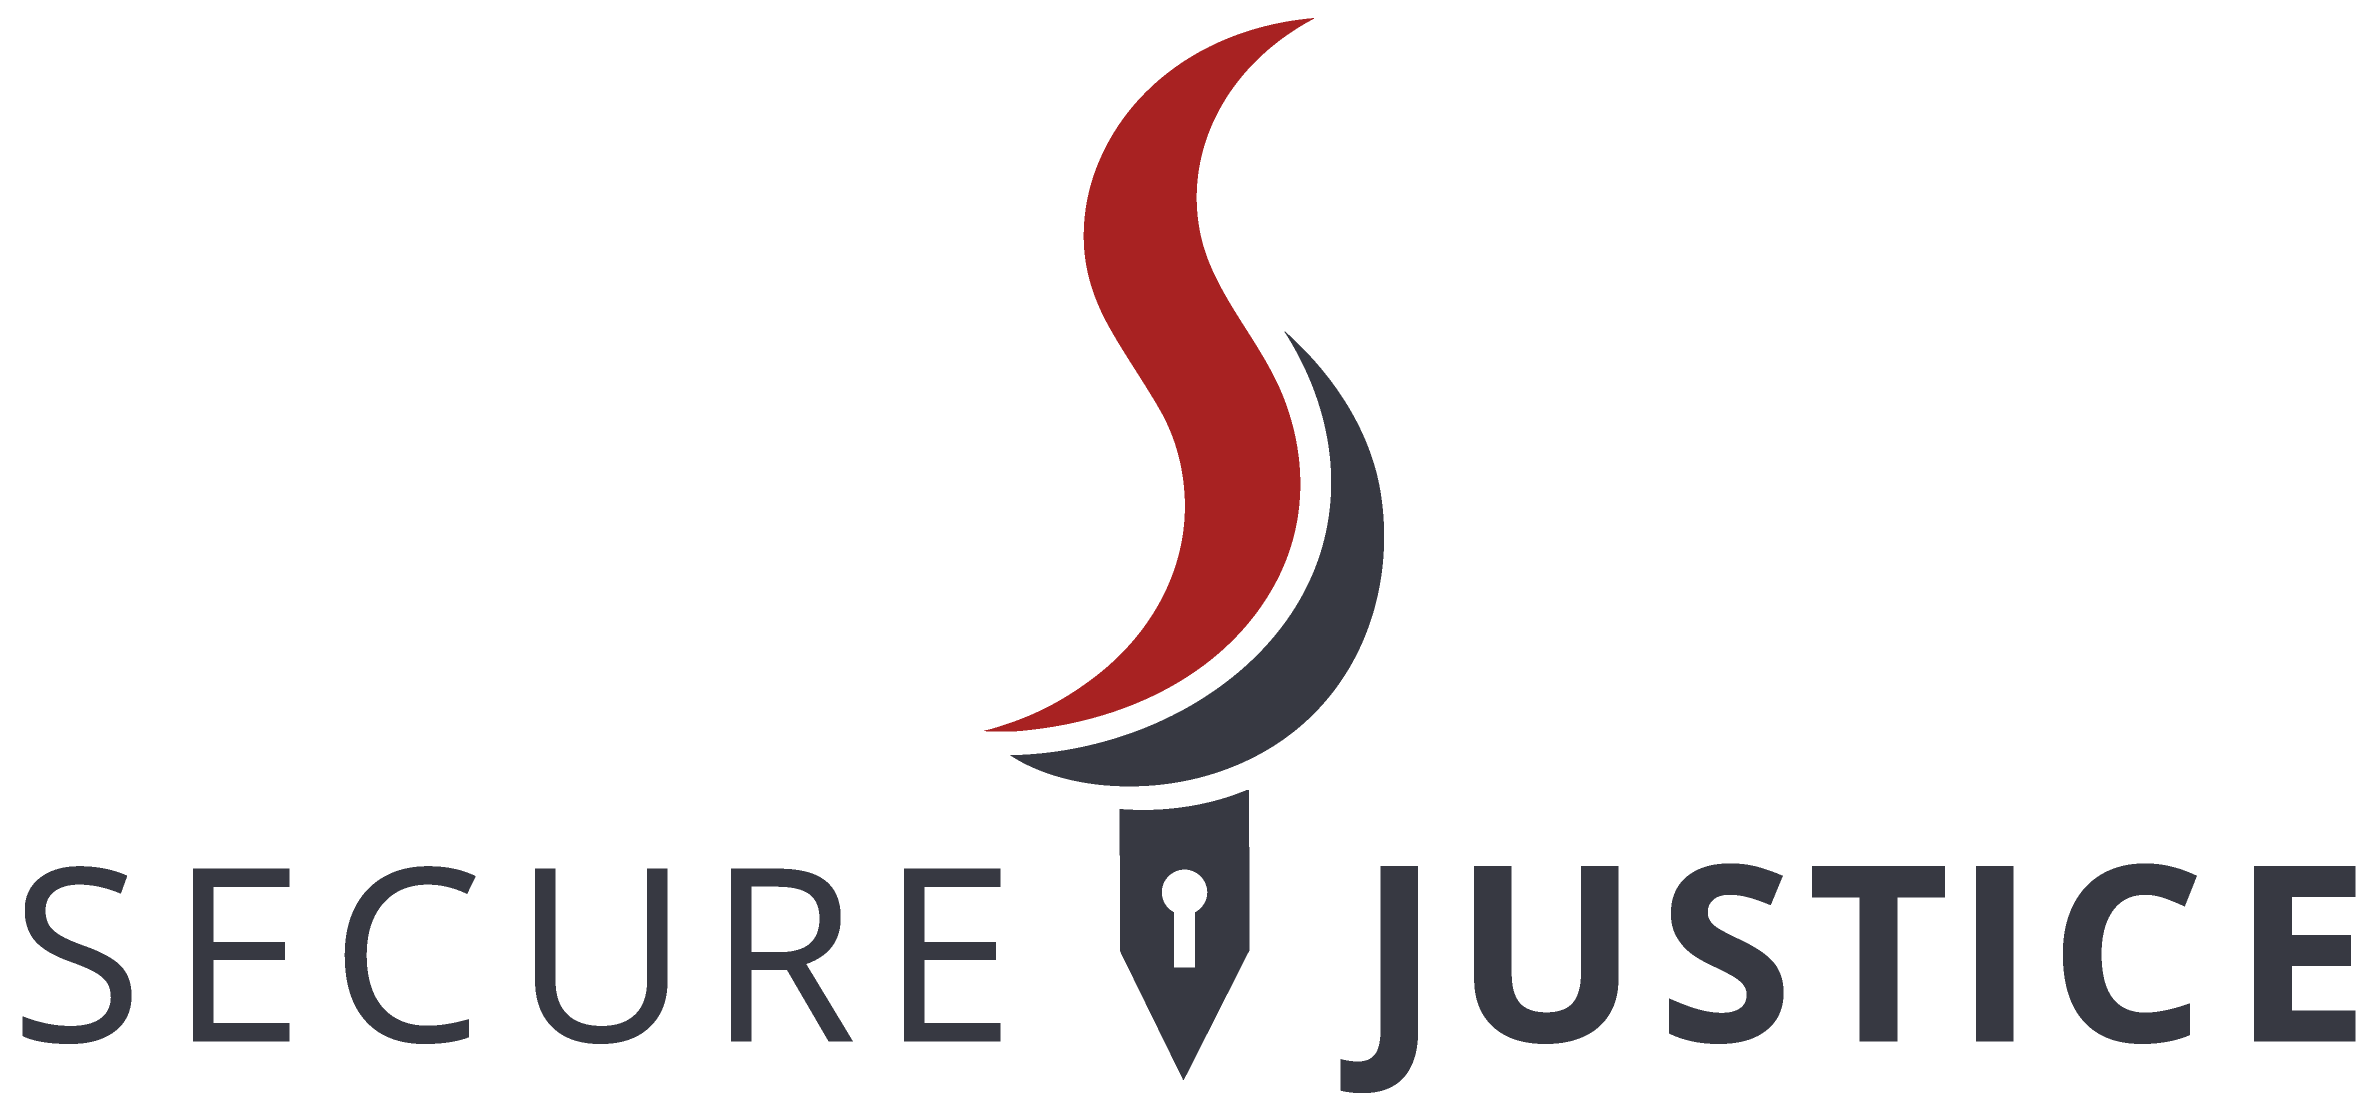 secure-justice logo